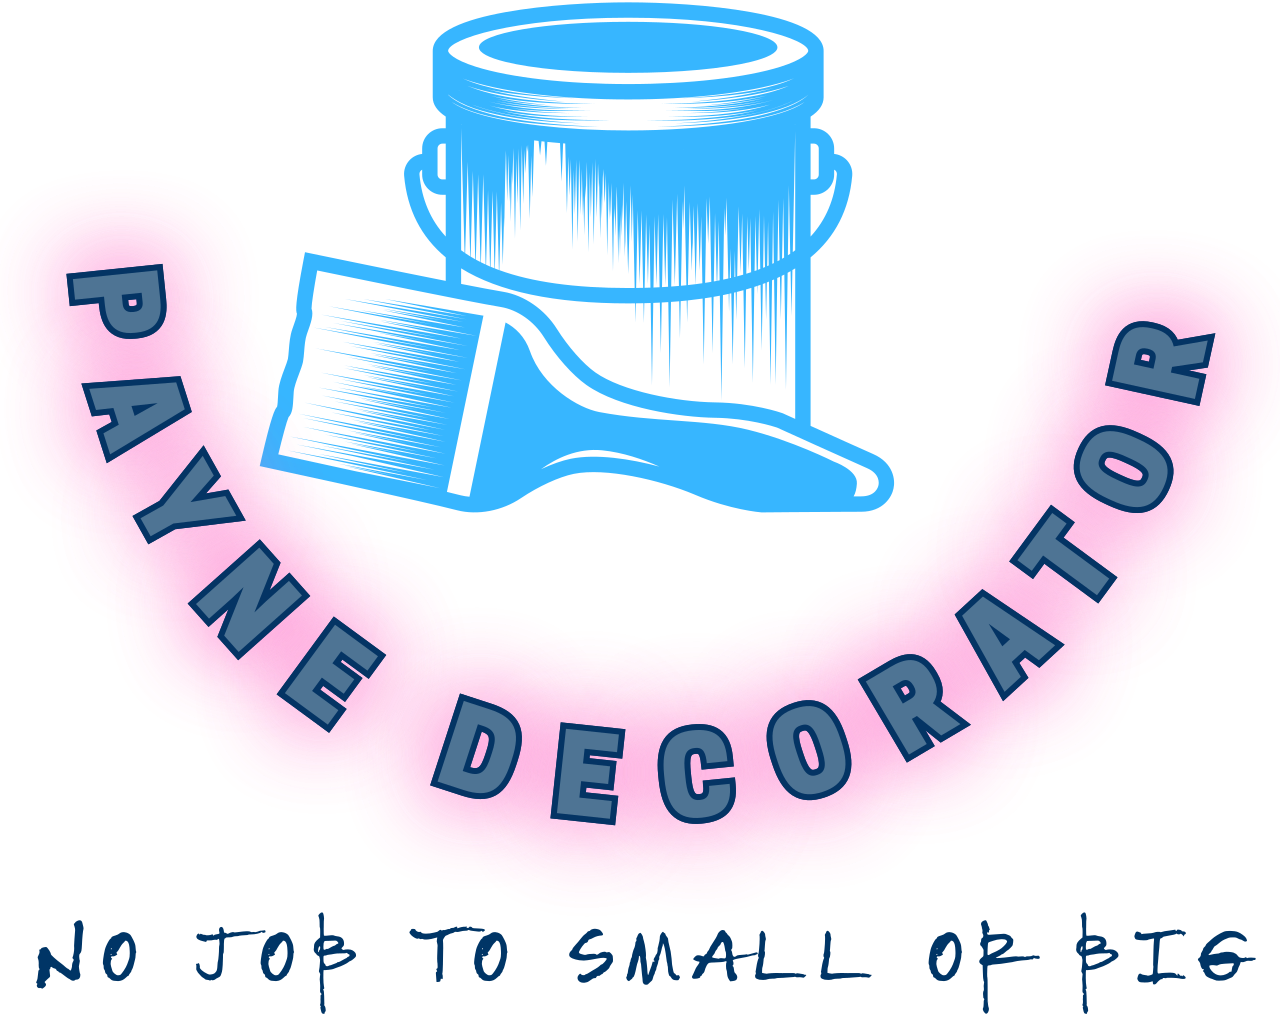 PAYNE DECORATOR 's logo